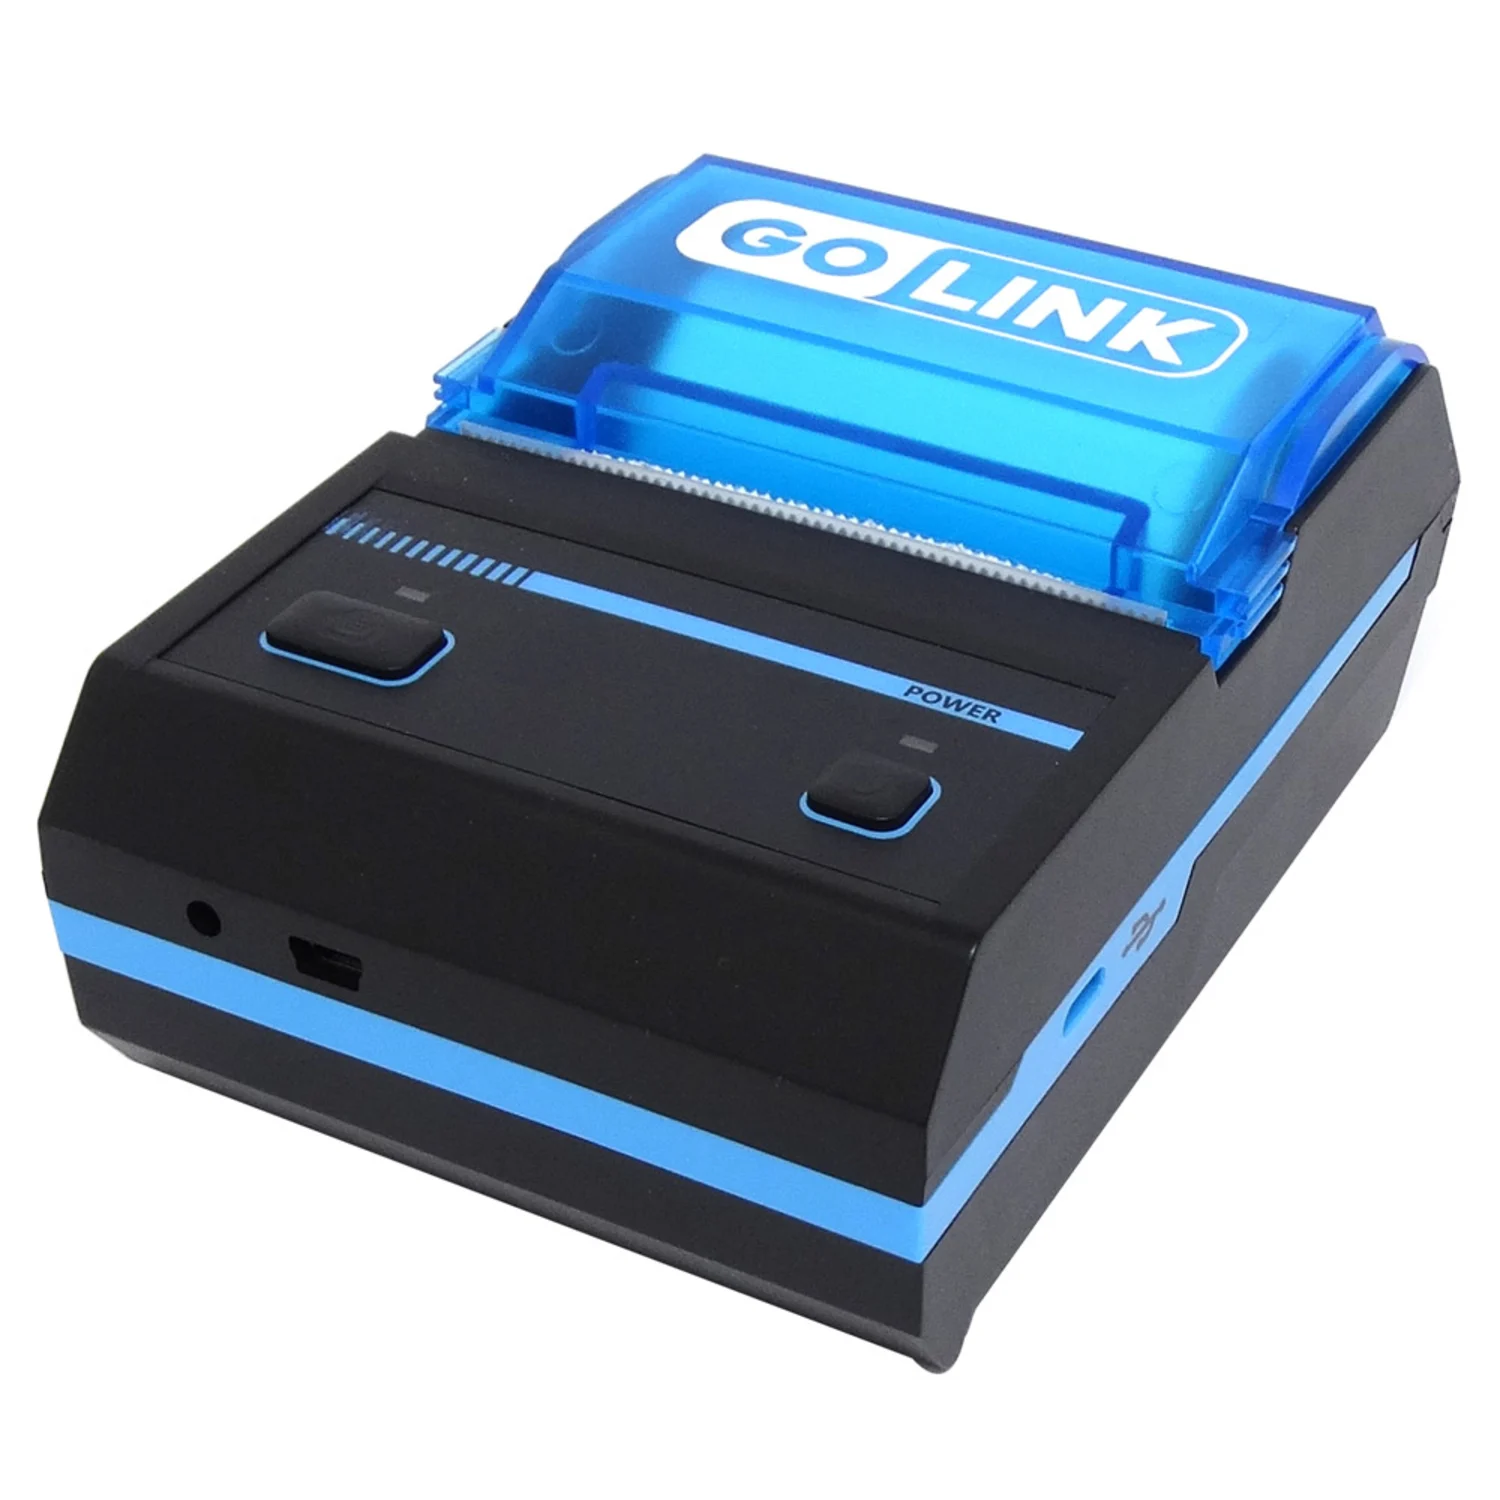 Mini Impressora Térmica Golink Gl-1020 / 58mm - Azul